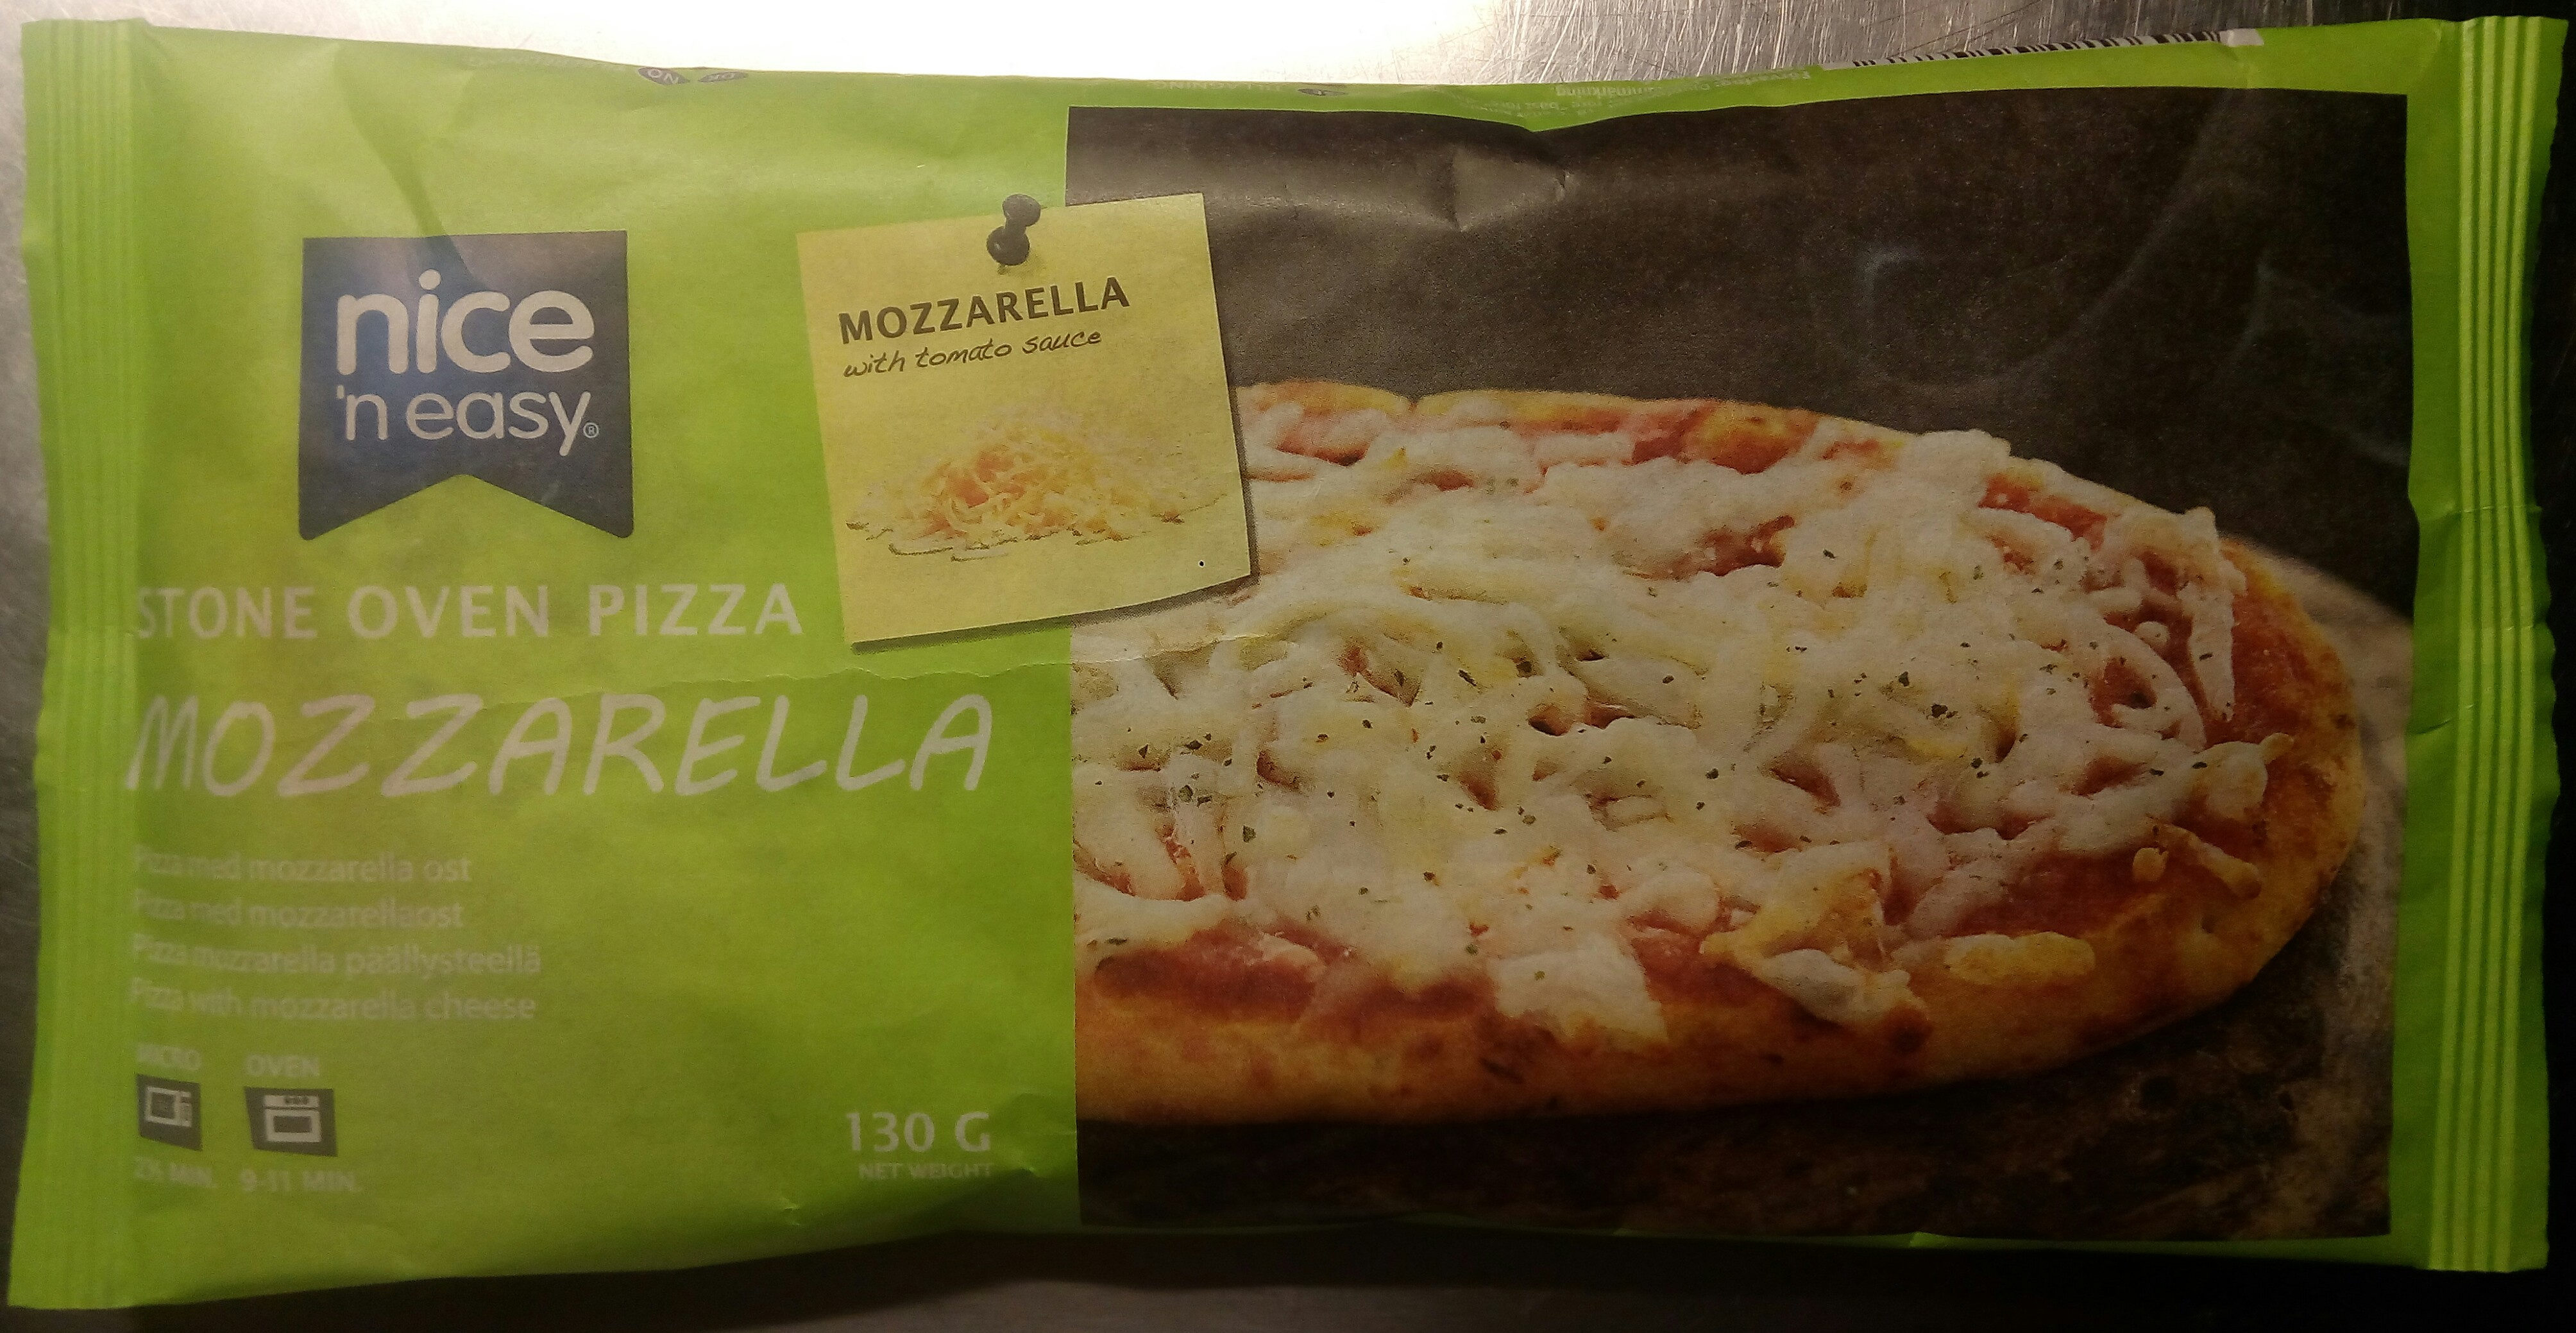 Nice 'n easy Stone oven pizza Mozzarella - Produkt